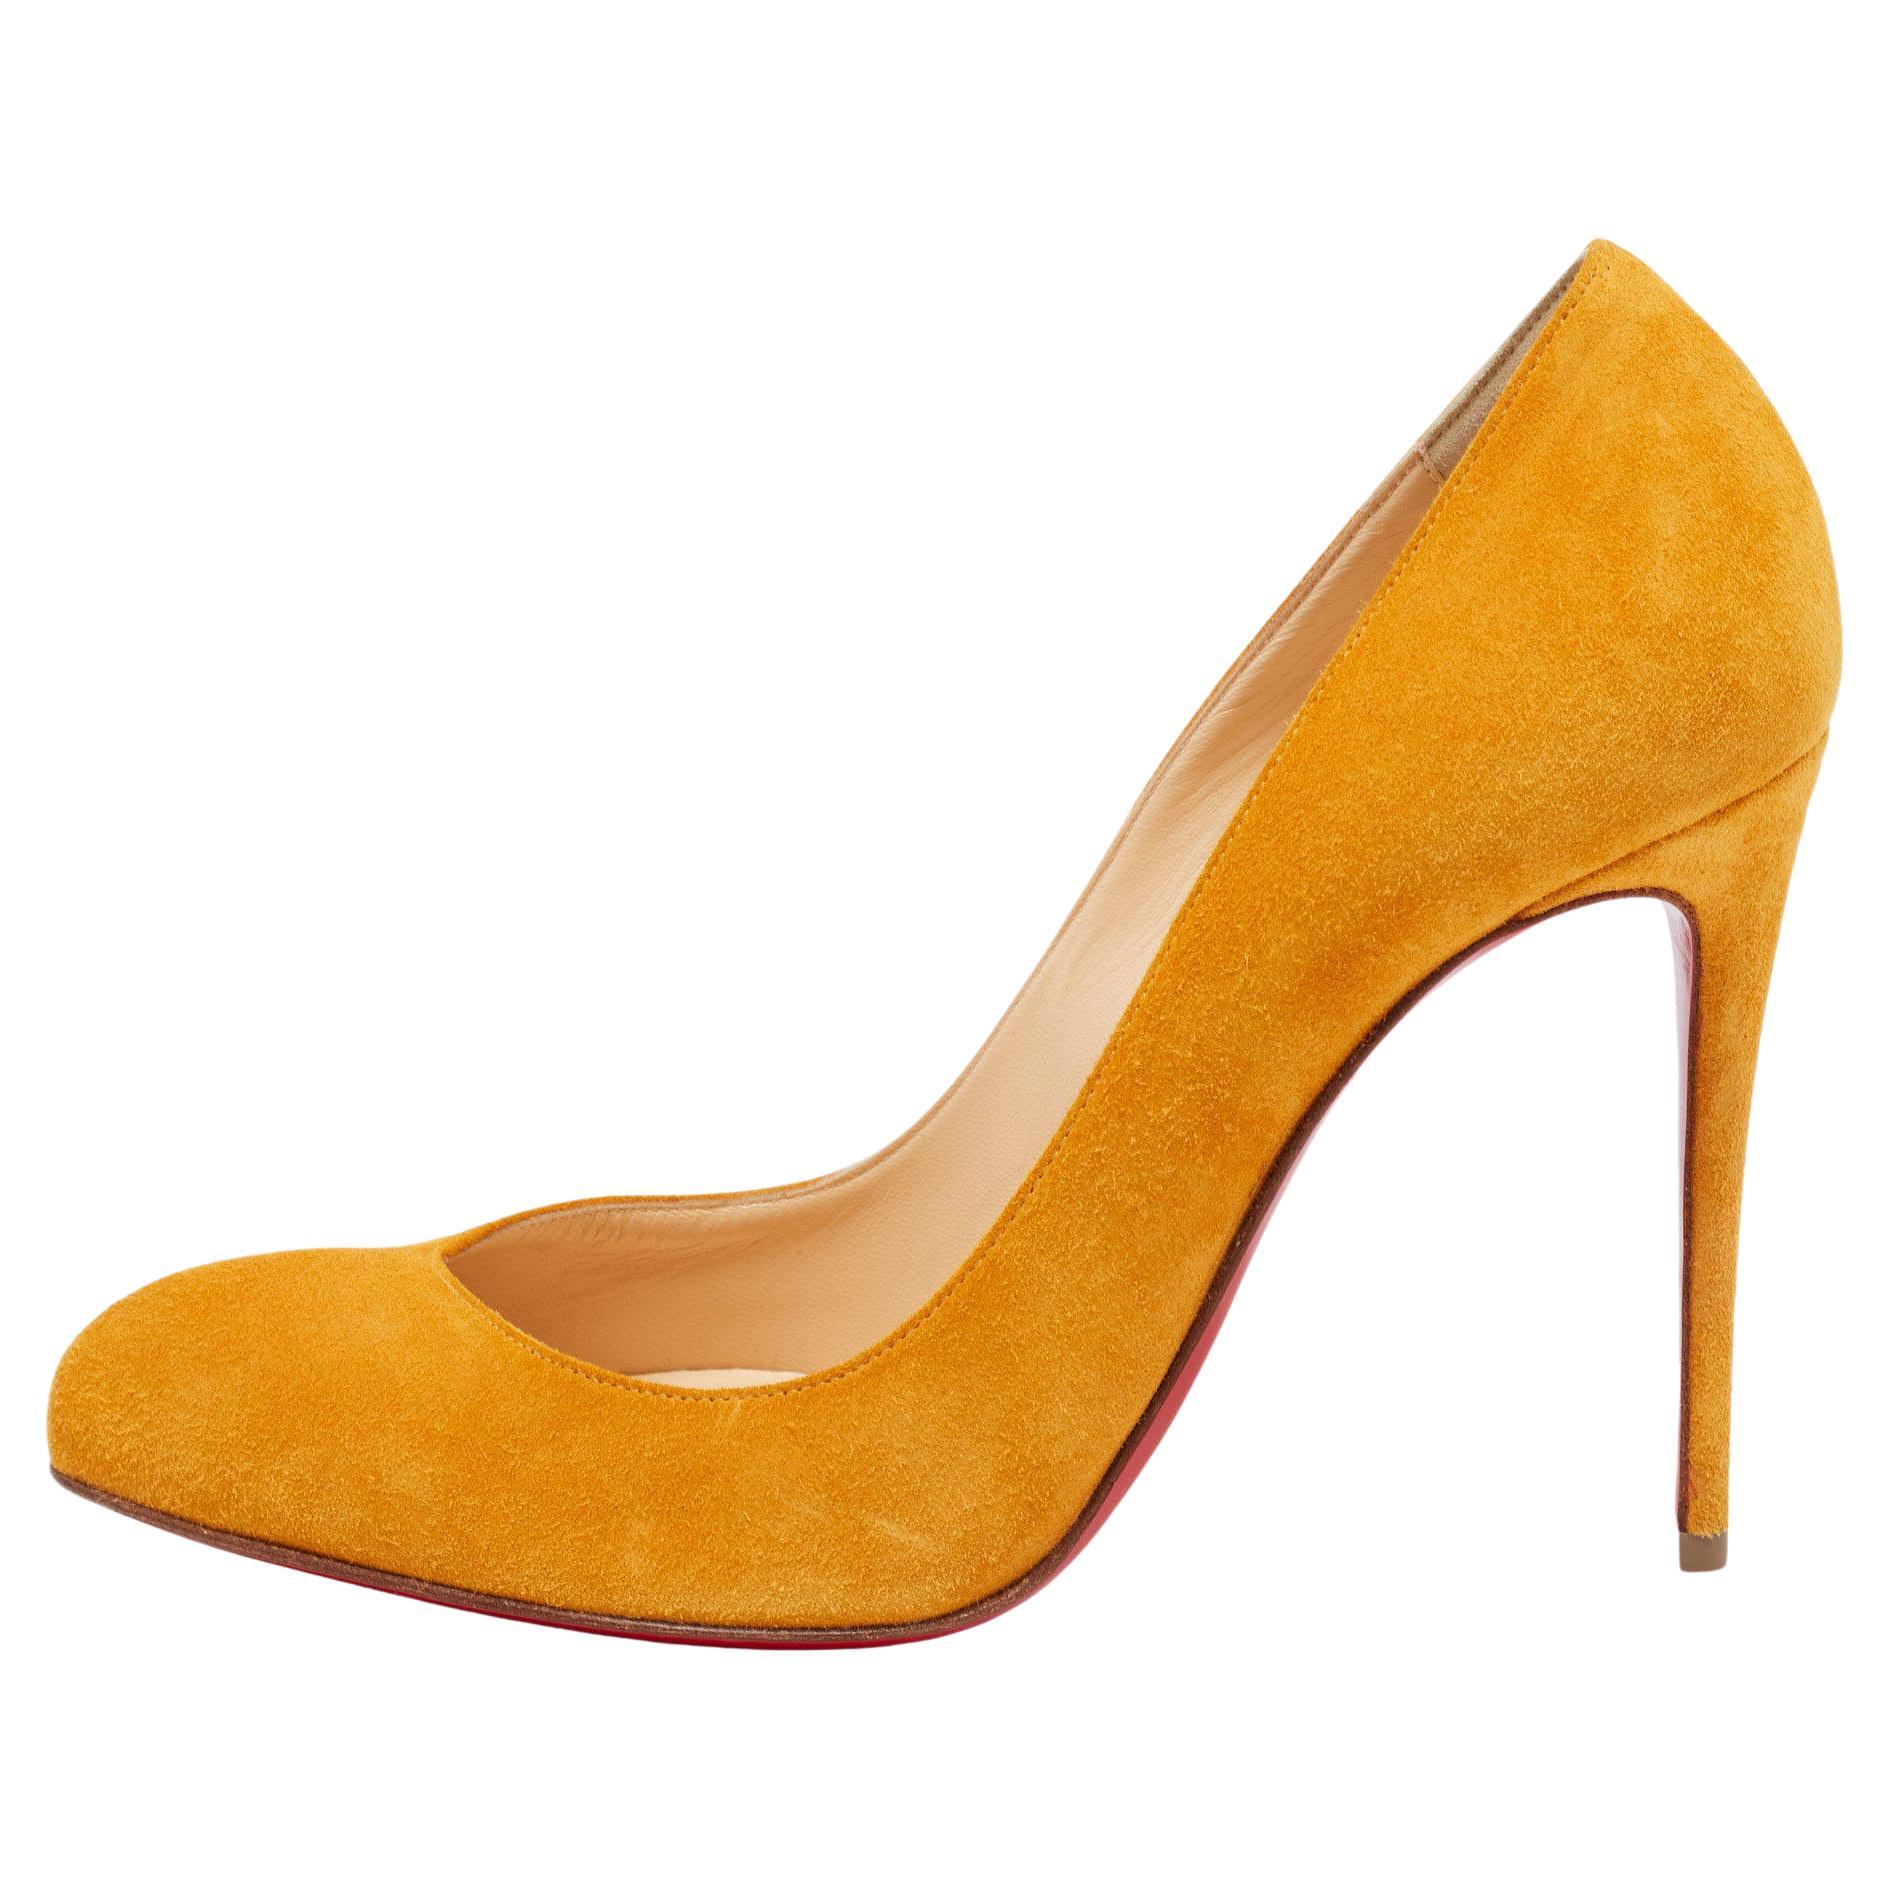 Christian Louboutin Bright Orange Suede Corneille Pumps Size 38.5